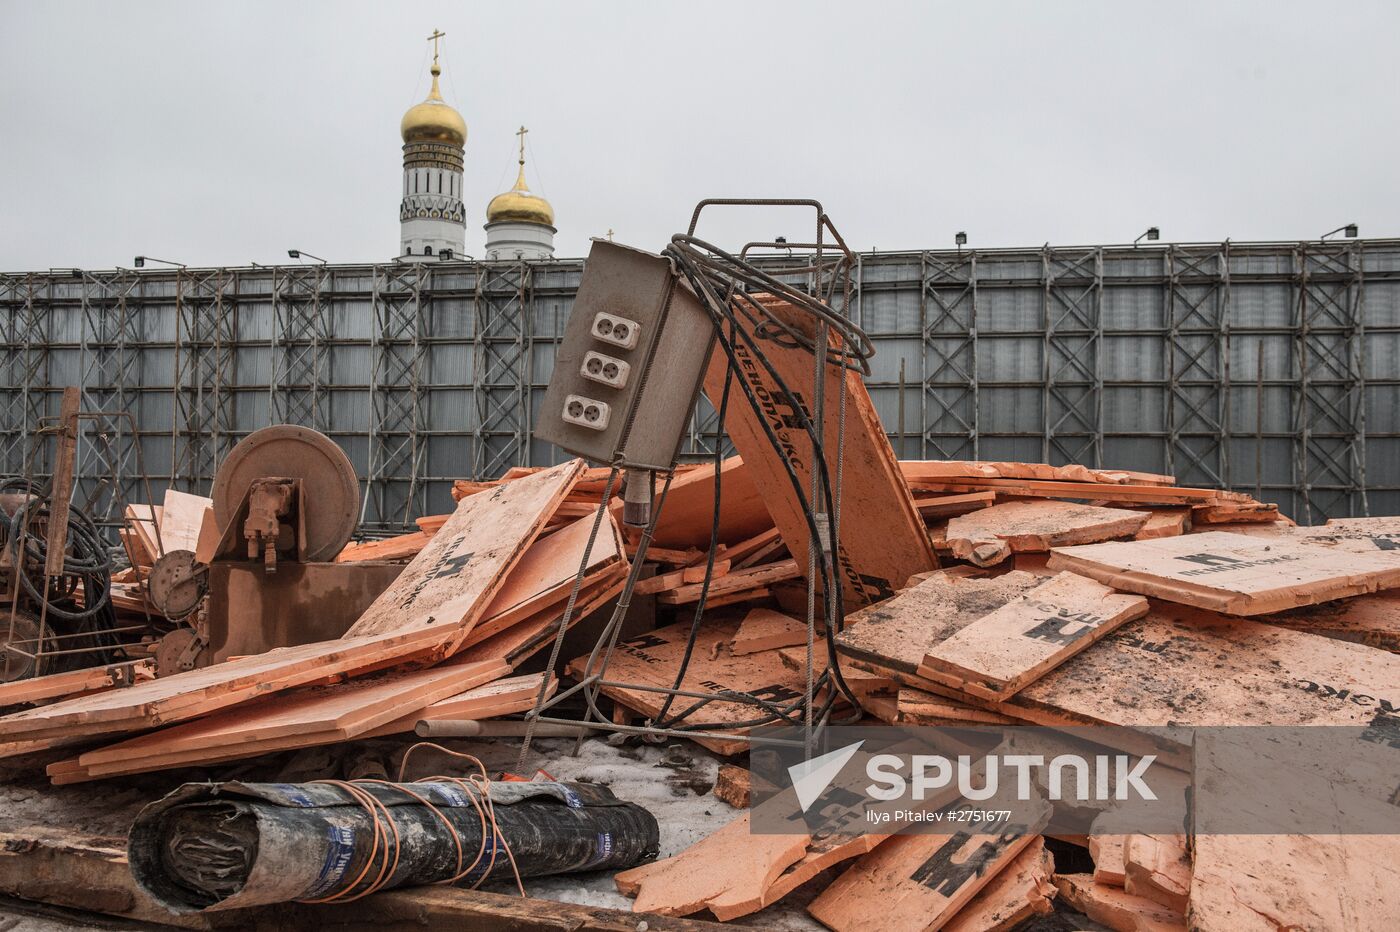 Office Building 14 demolished in the Kremlin